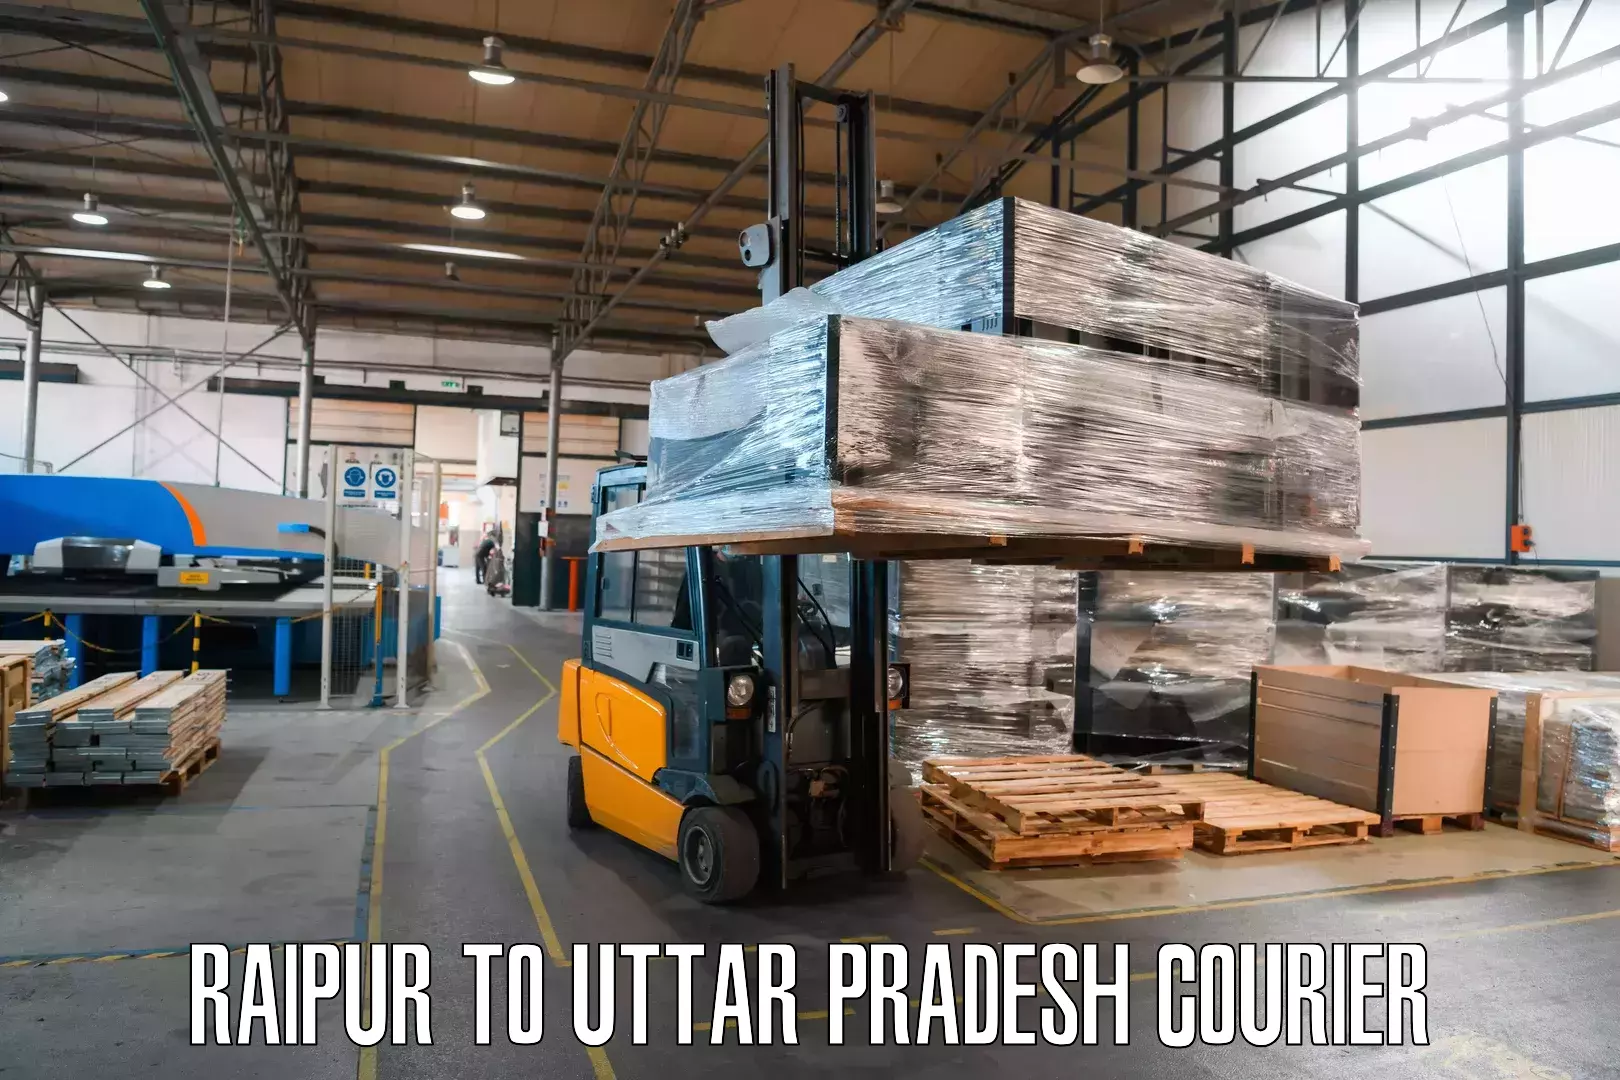 User-friendly courier app Raipur to Shahjahanpur